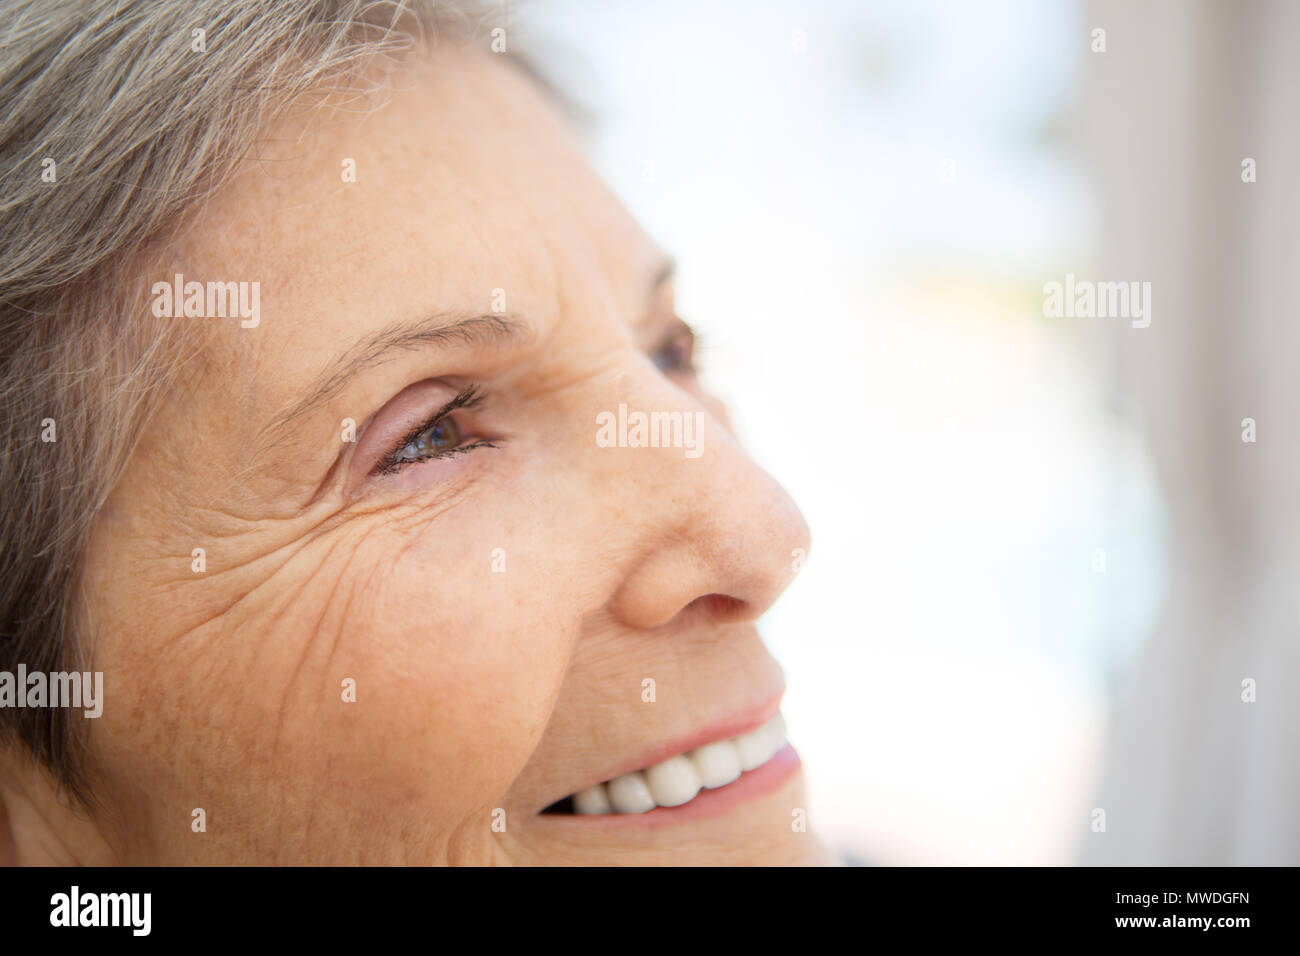 Portrait of a mature elderly woman smiling. Stock Photo